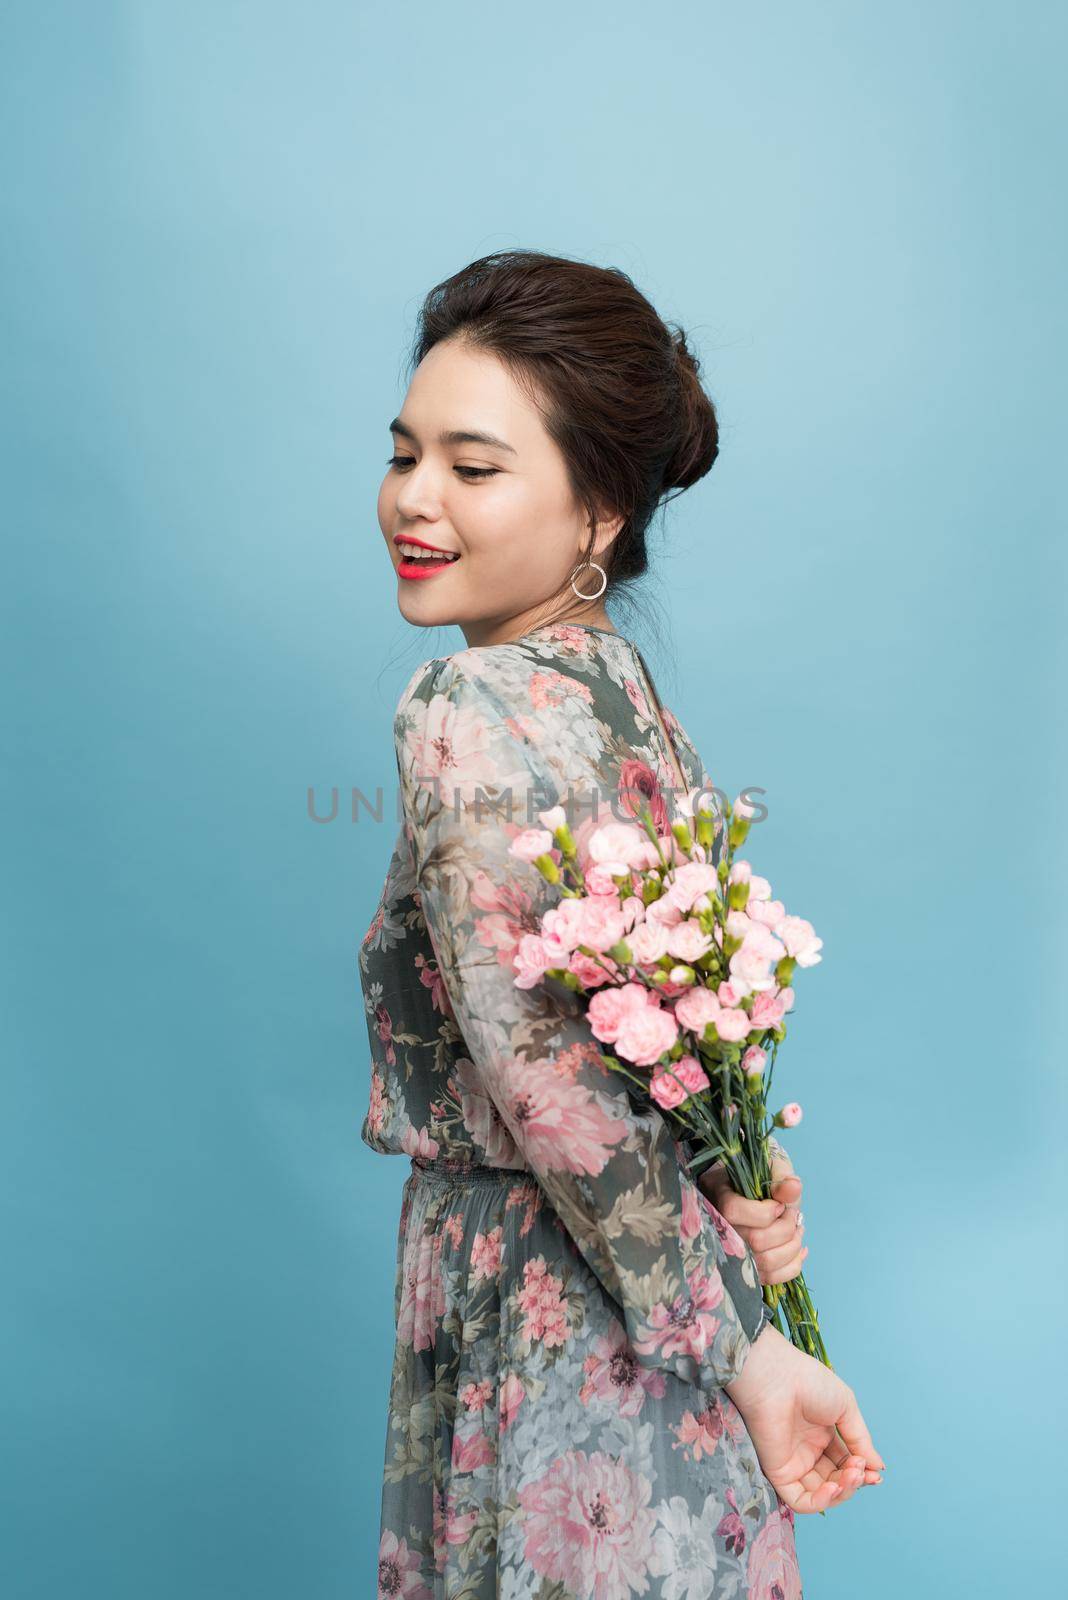 Beautiful portrait of pretty woman with flower bouquet, fashion make up, elegant dress